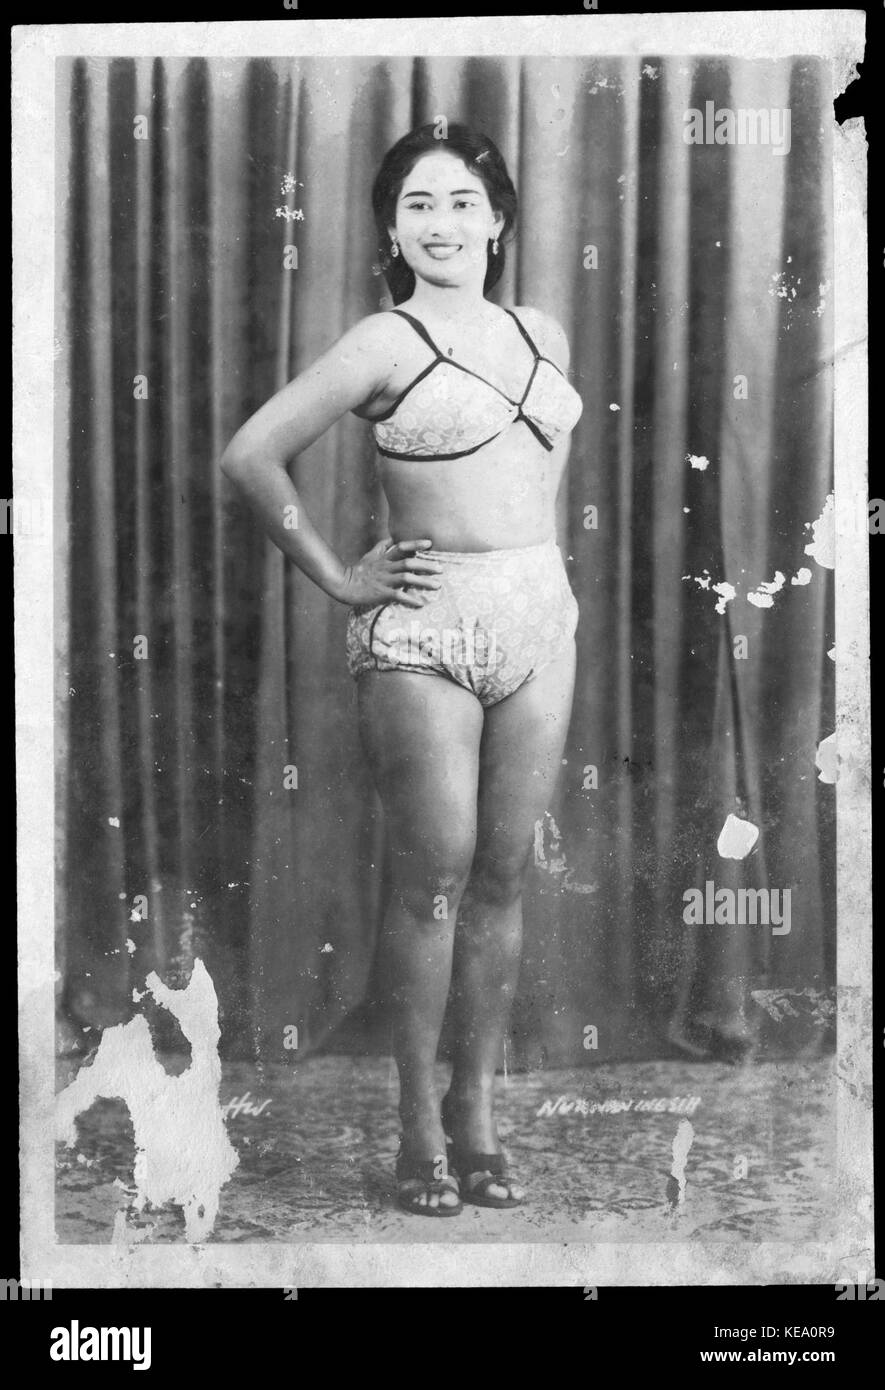 Vintage bikini Black and White Stock Photos and Images